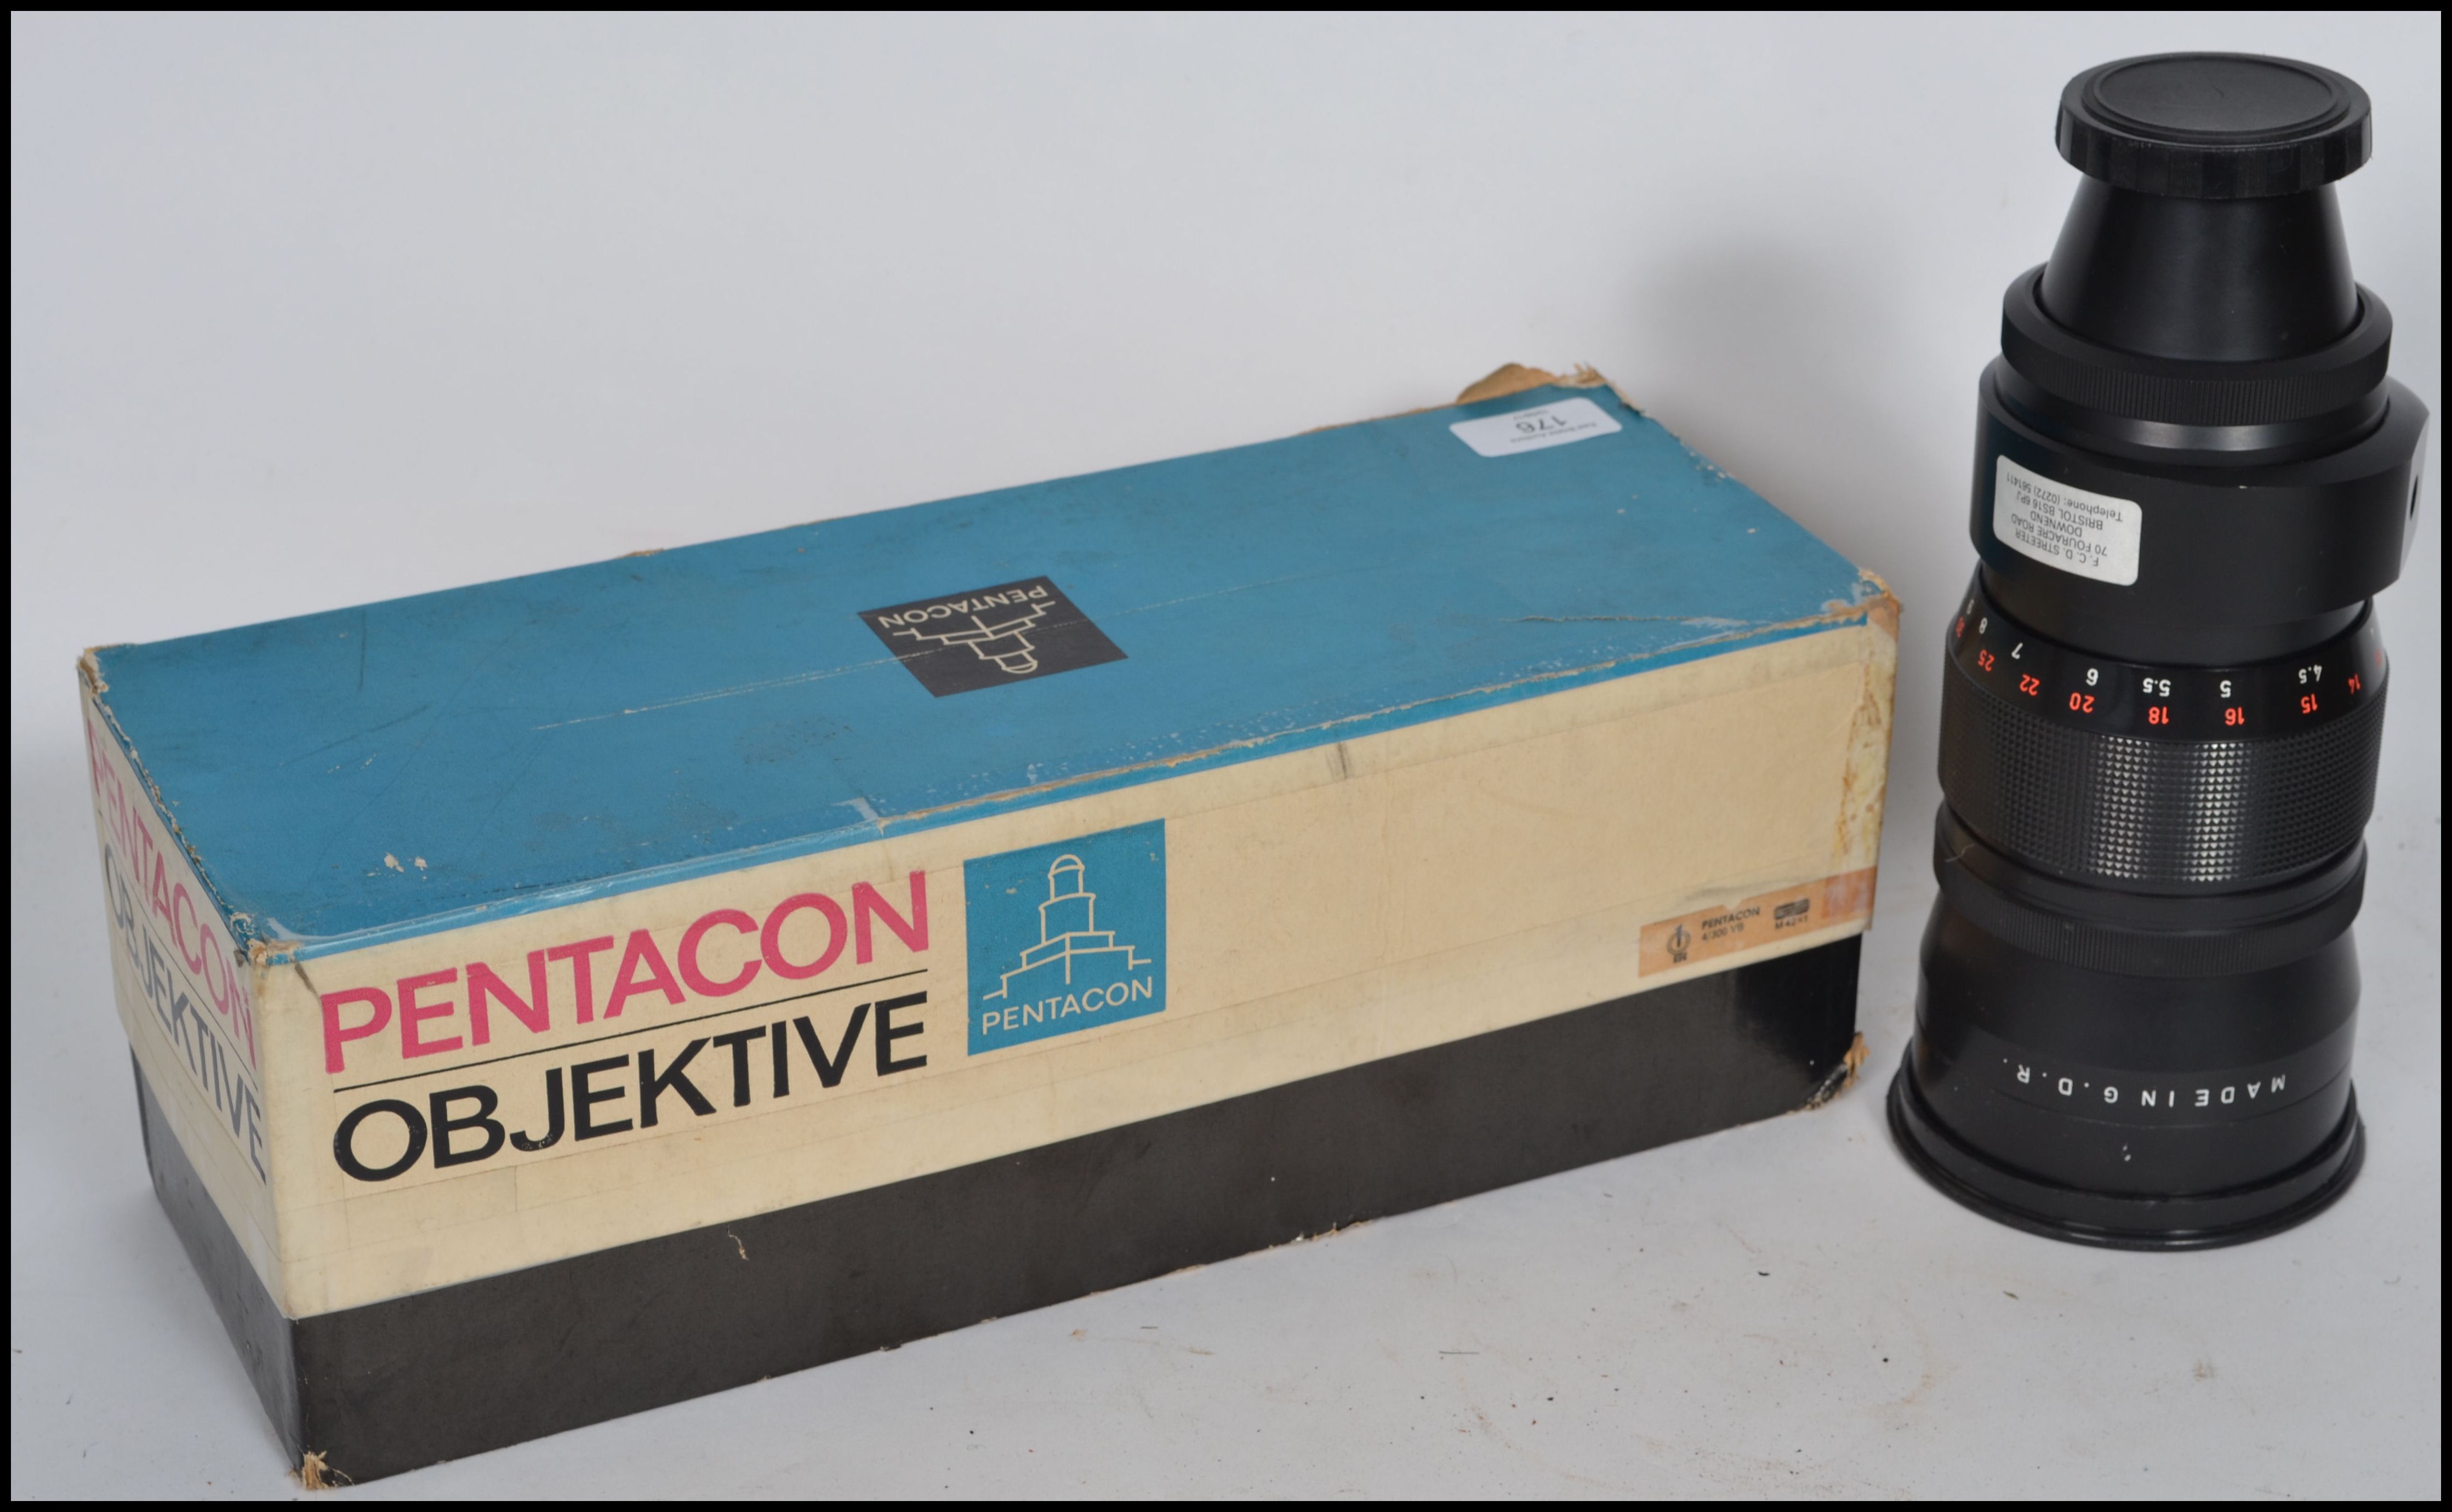 A vintage Pentacon Objektive 4/300 VB M42 X 1 Camera Telephoto Lens complete in the original box.